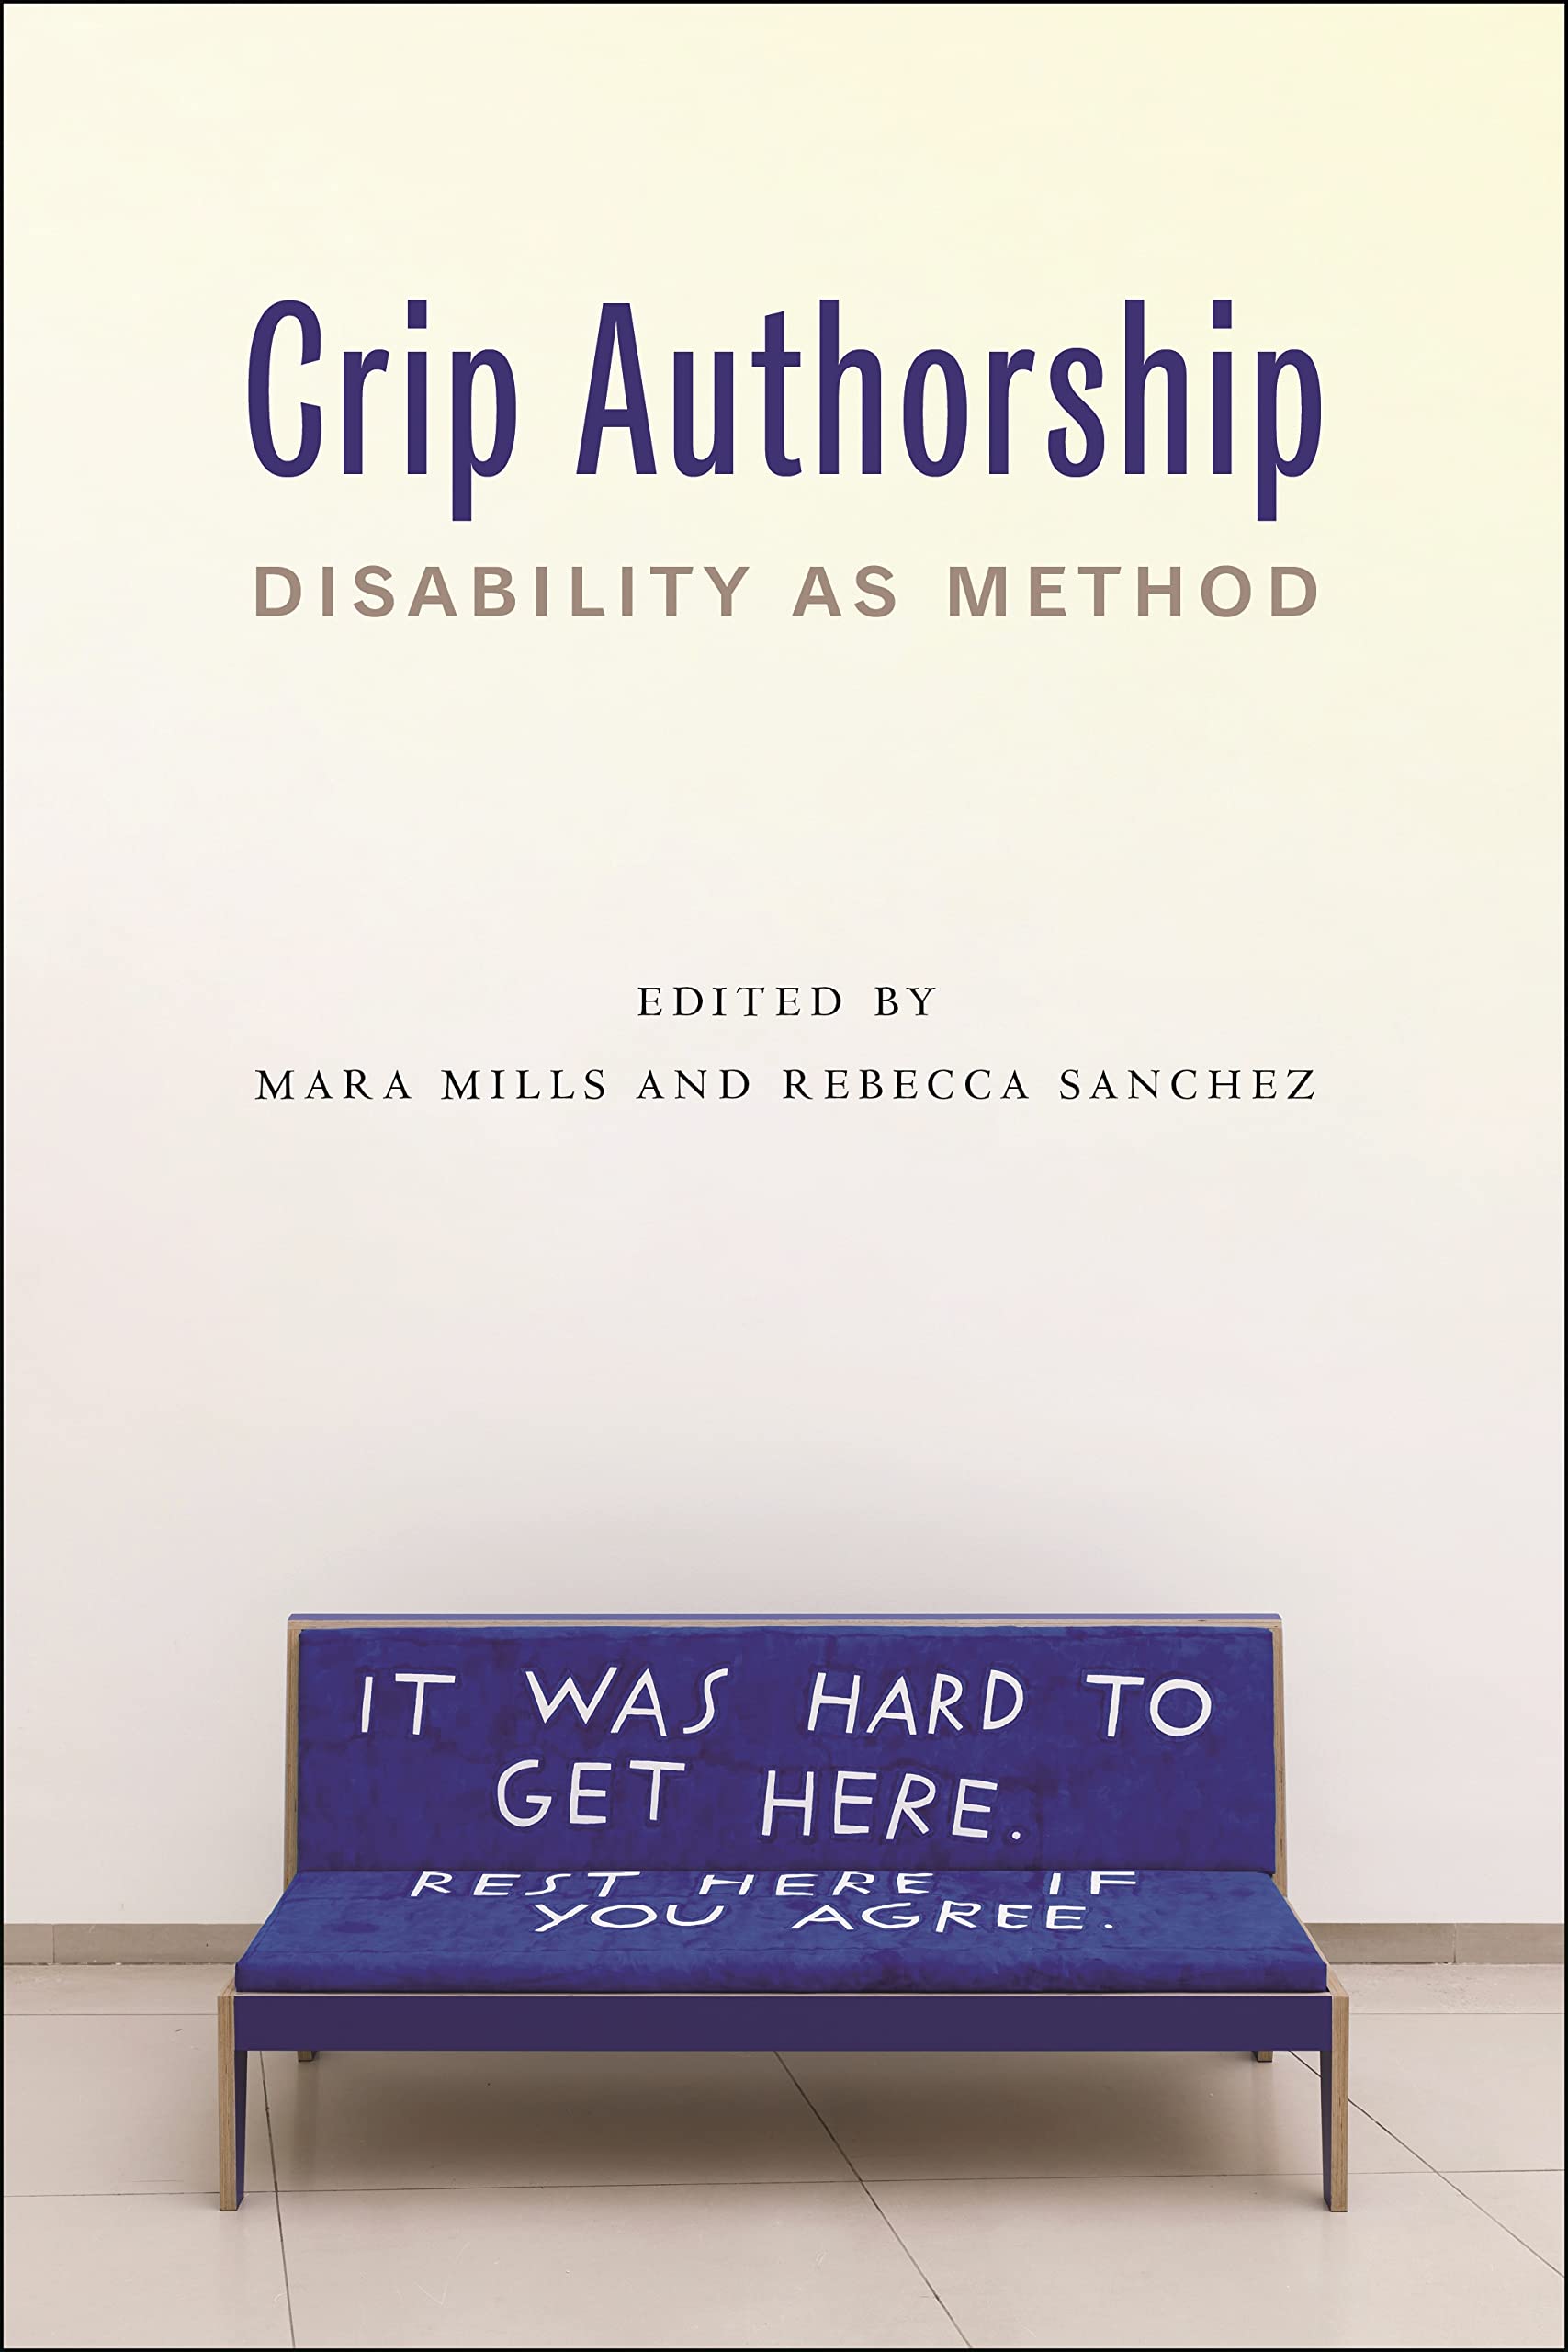 Crip Authorship: Disability as Method kindle ebook $0